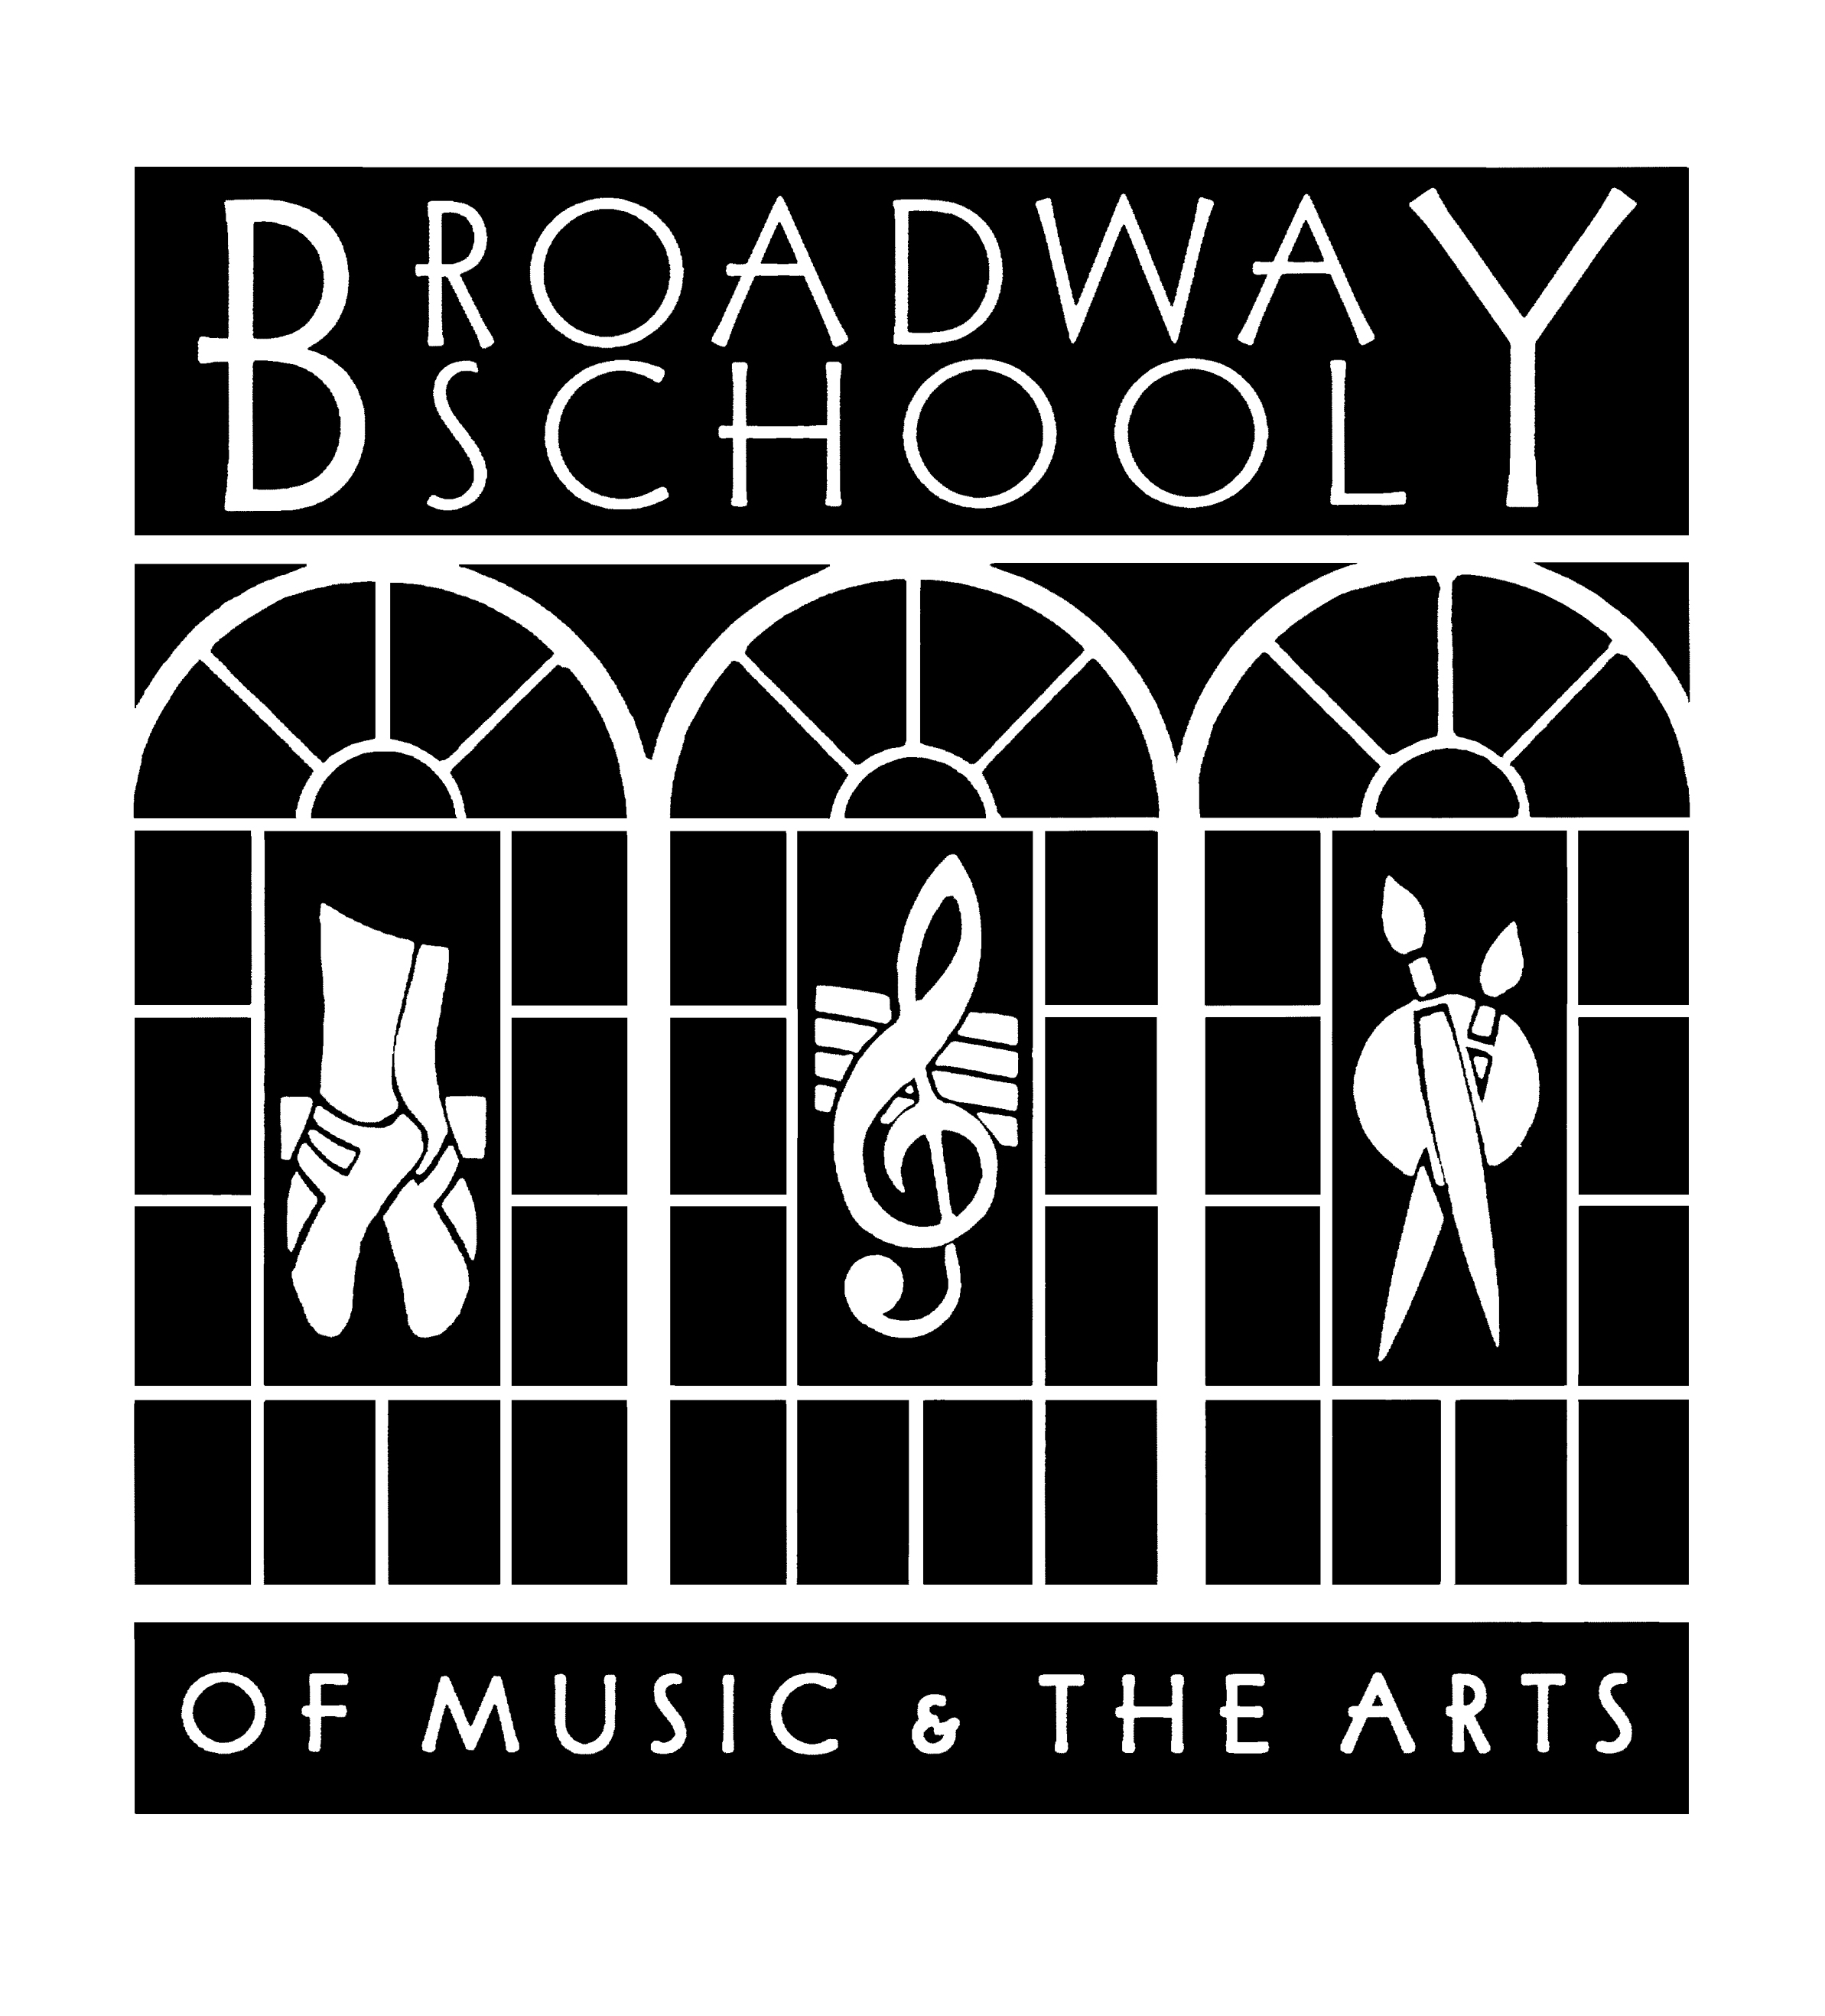 Broadway School of Music & the Arts logo